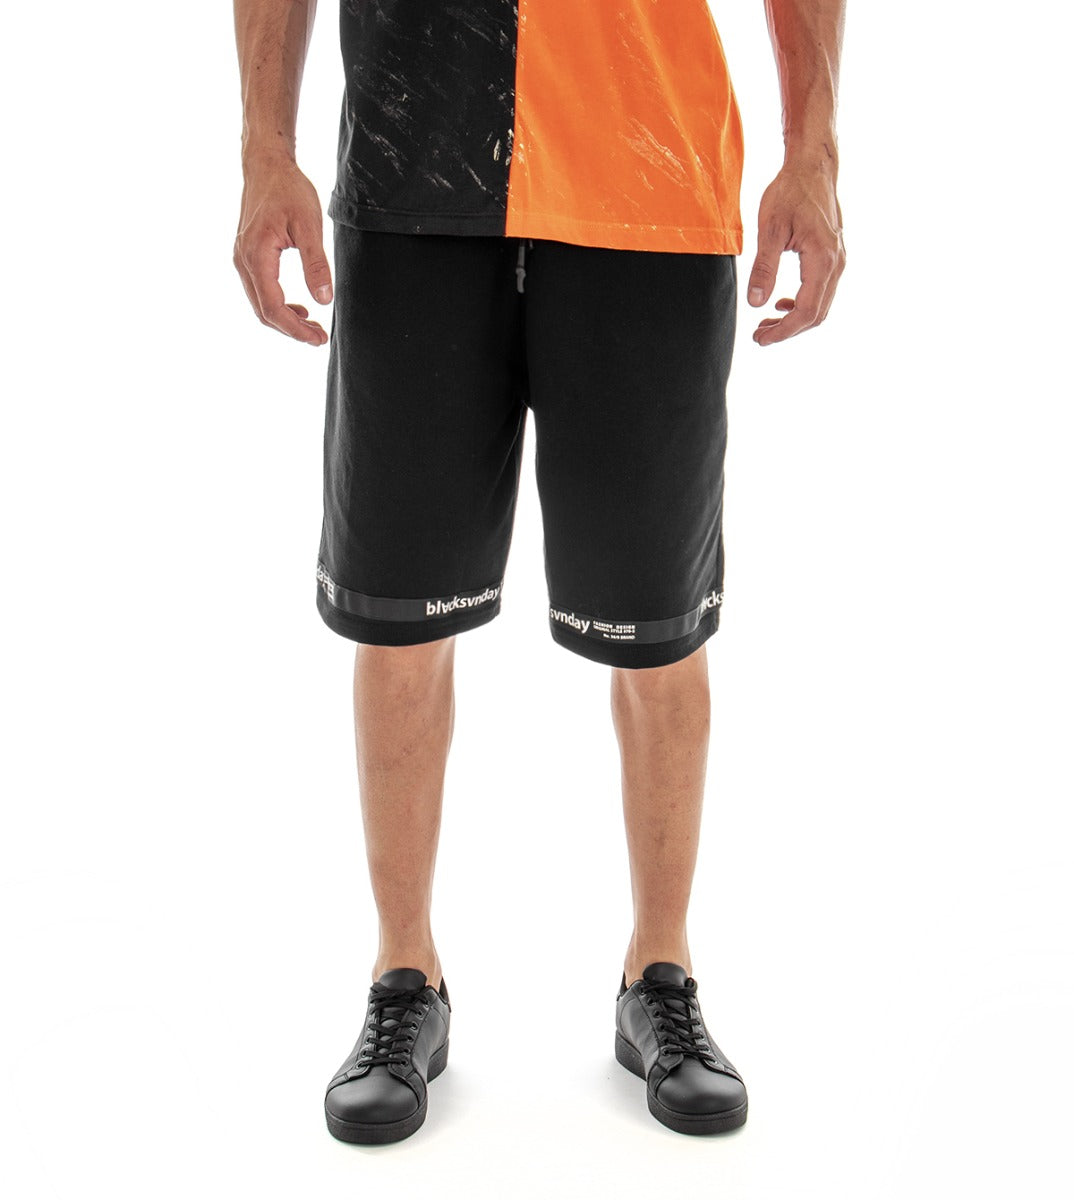 Bermuda Short Men's Shorts Black Solid Color Cotton Over GIOSAL-PC1508A